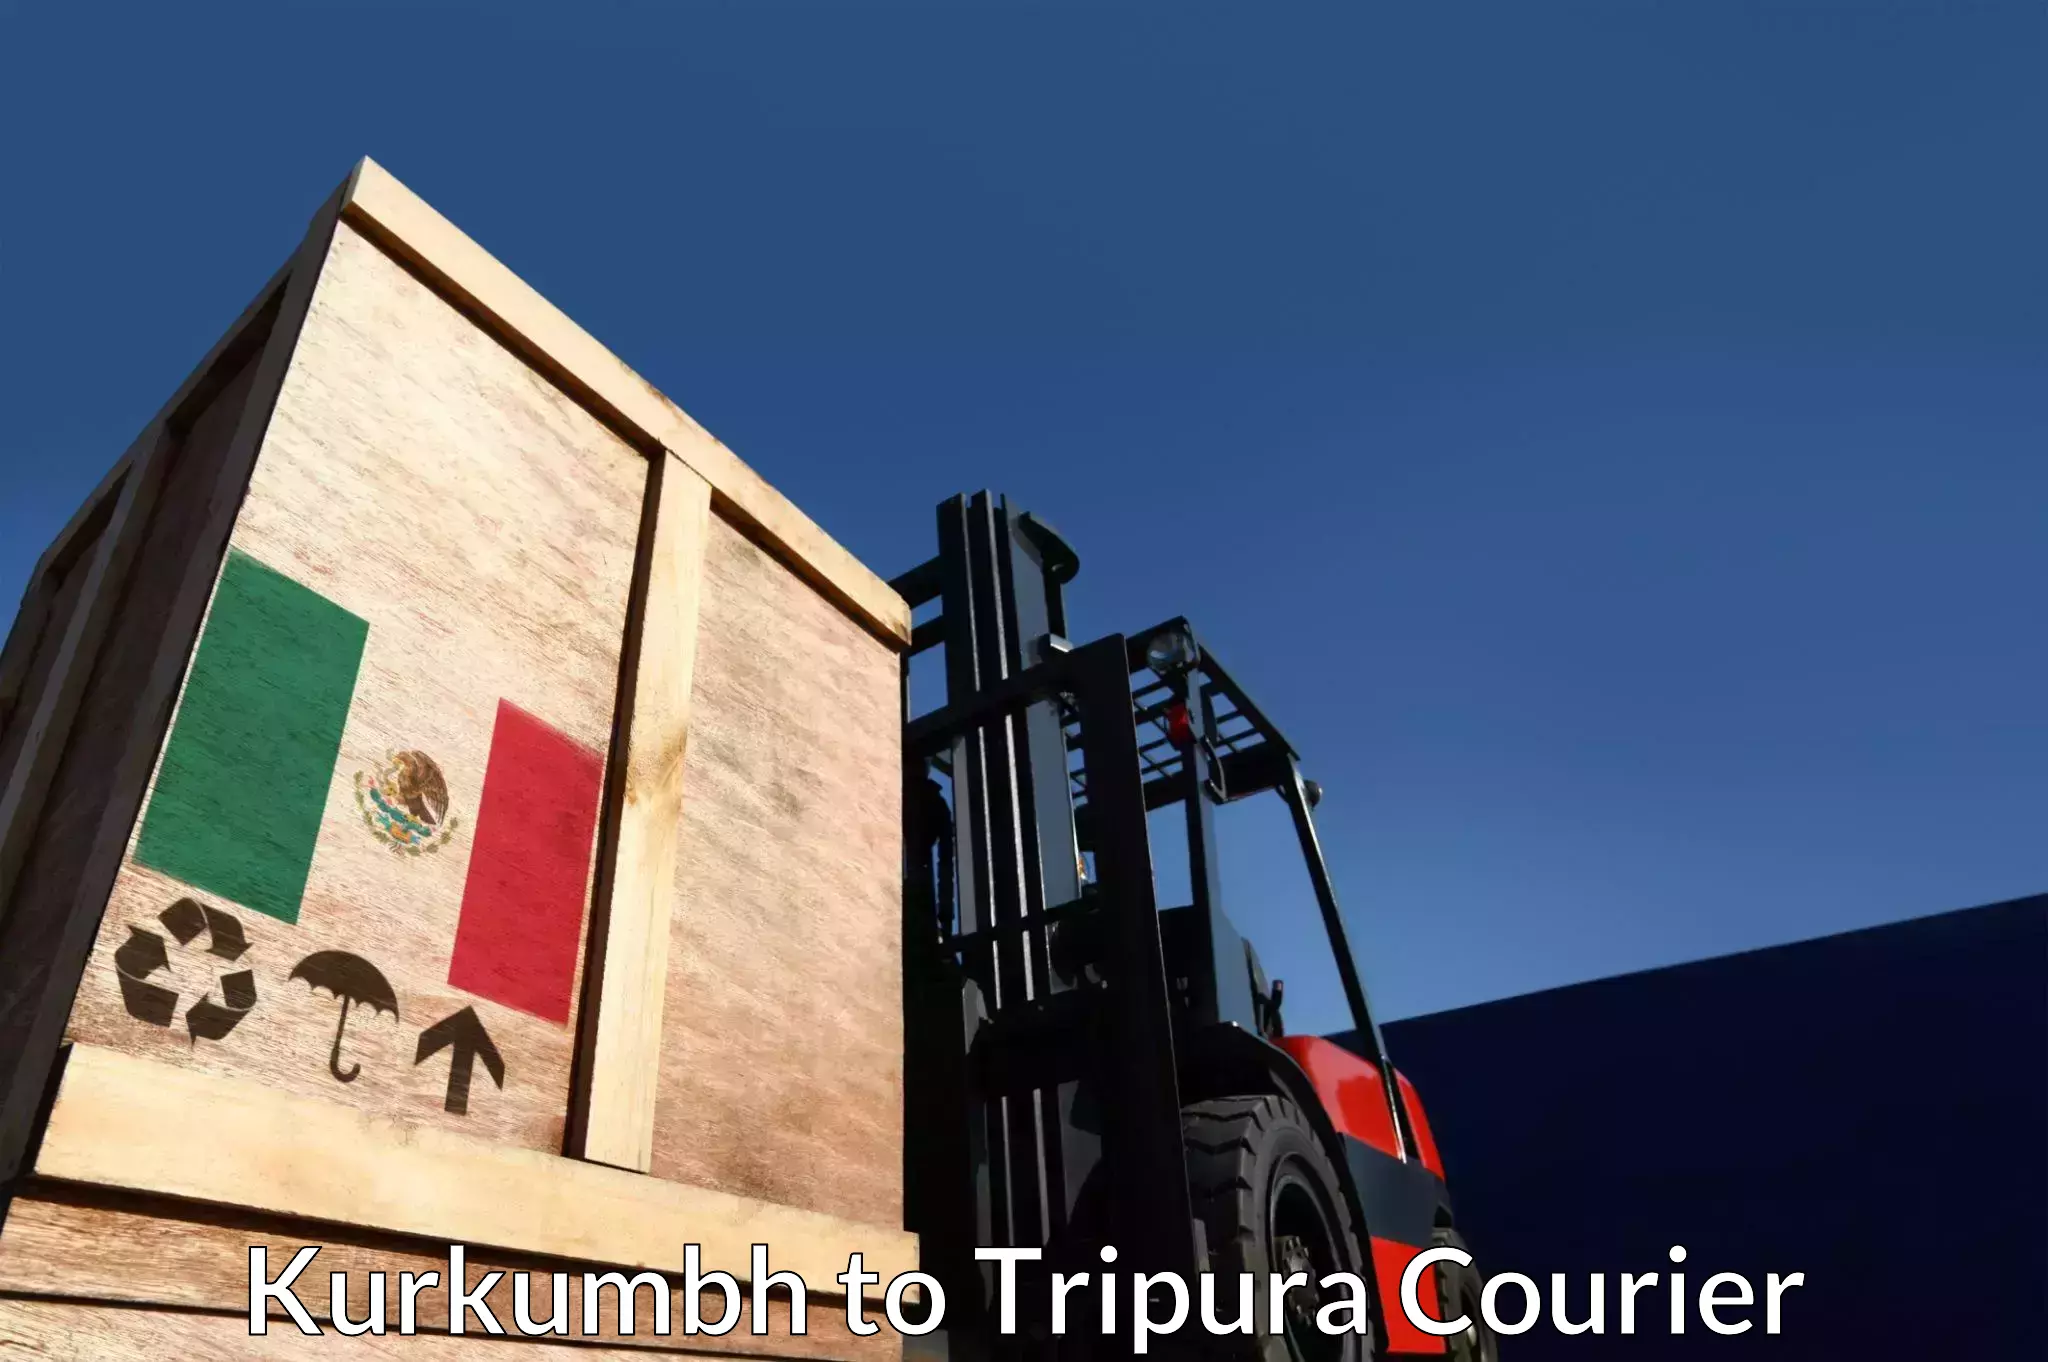 Efficient order fulfillment Kurkumbh to Tripura